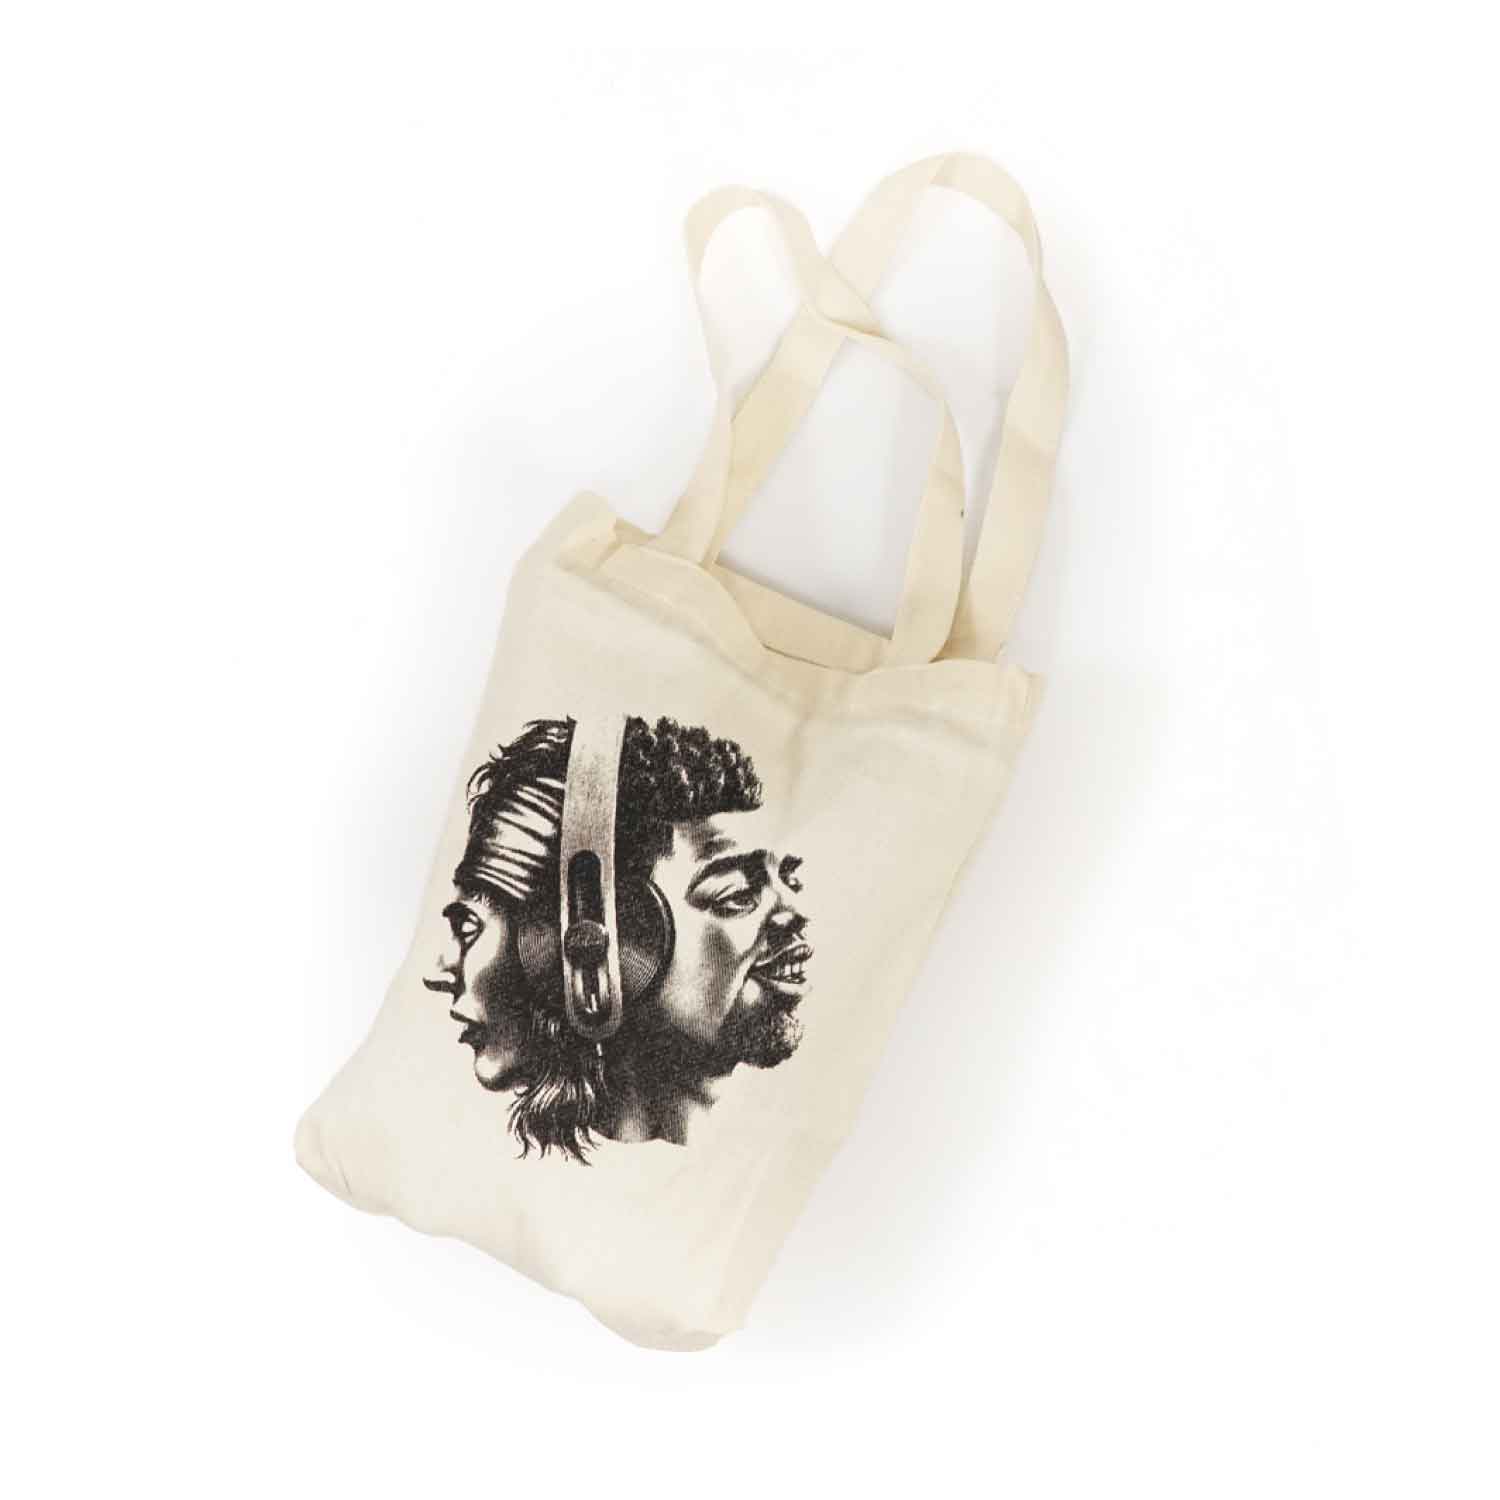 Kasai kuba raffia bag x by kaziba-design - Hand bags - Afrikrea